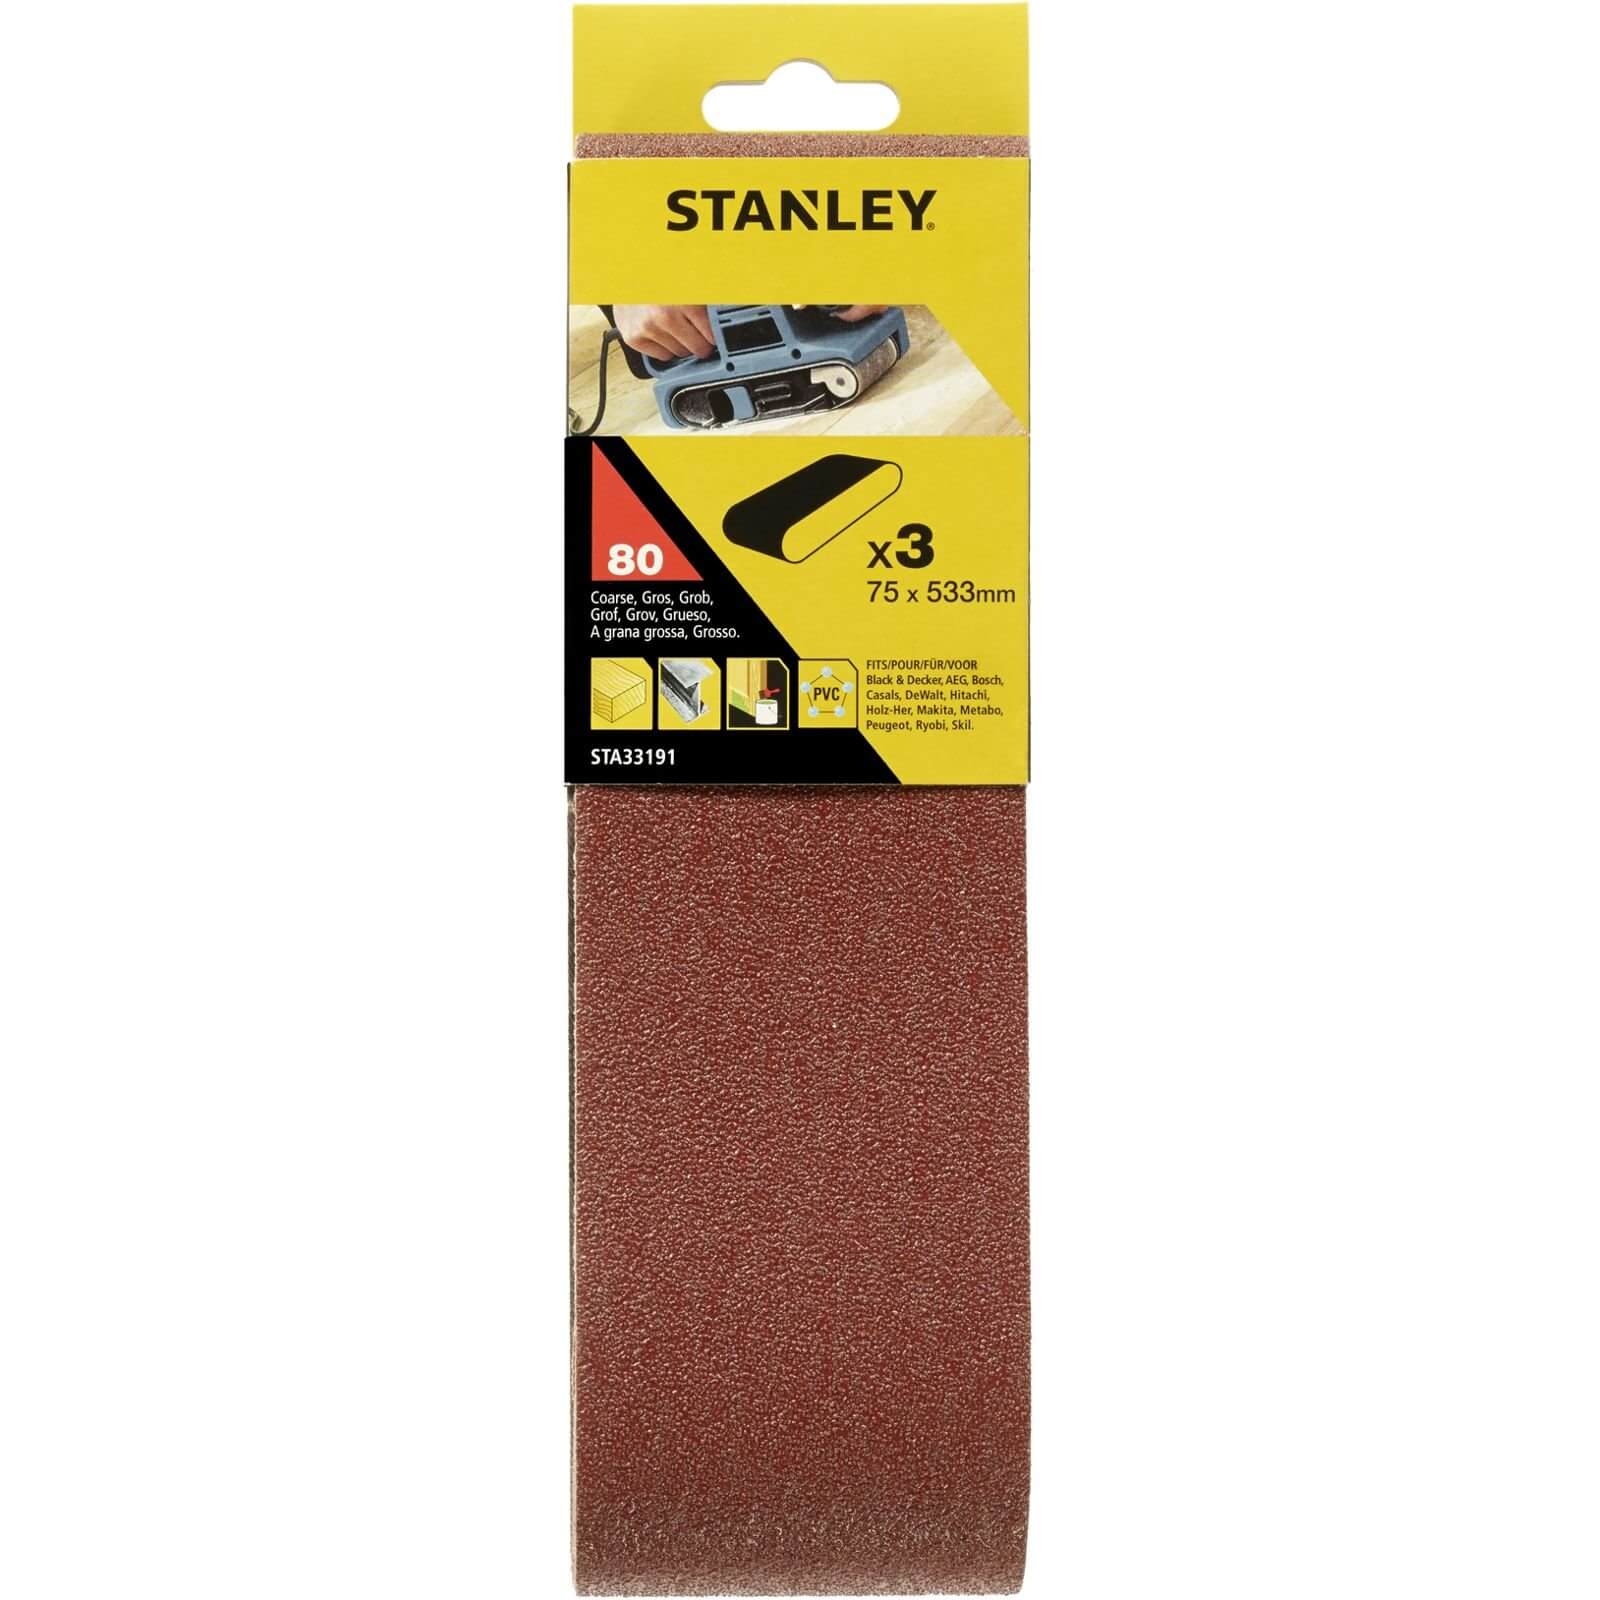 Stanley Belt Sander Belts 75x533 80G - STA33191-XJ